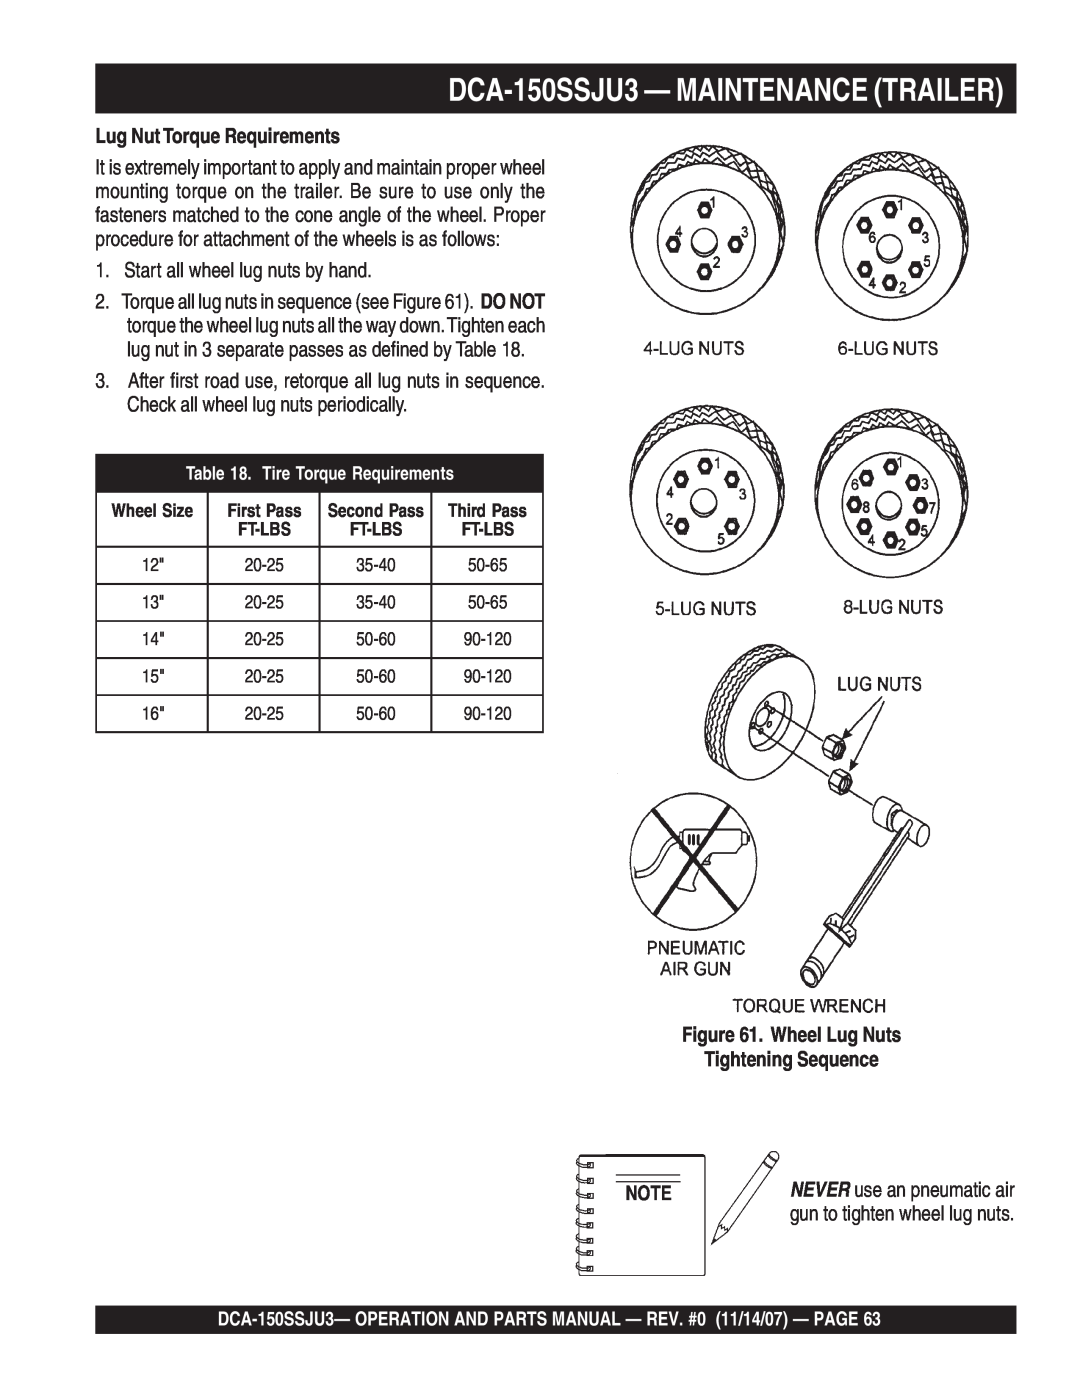 Multiquip DCA-150SSJU3- MAINTENANCE TRAILER, Lug Nut Torque Requirements, Wheel Lug Nuts Tightening Sequence 